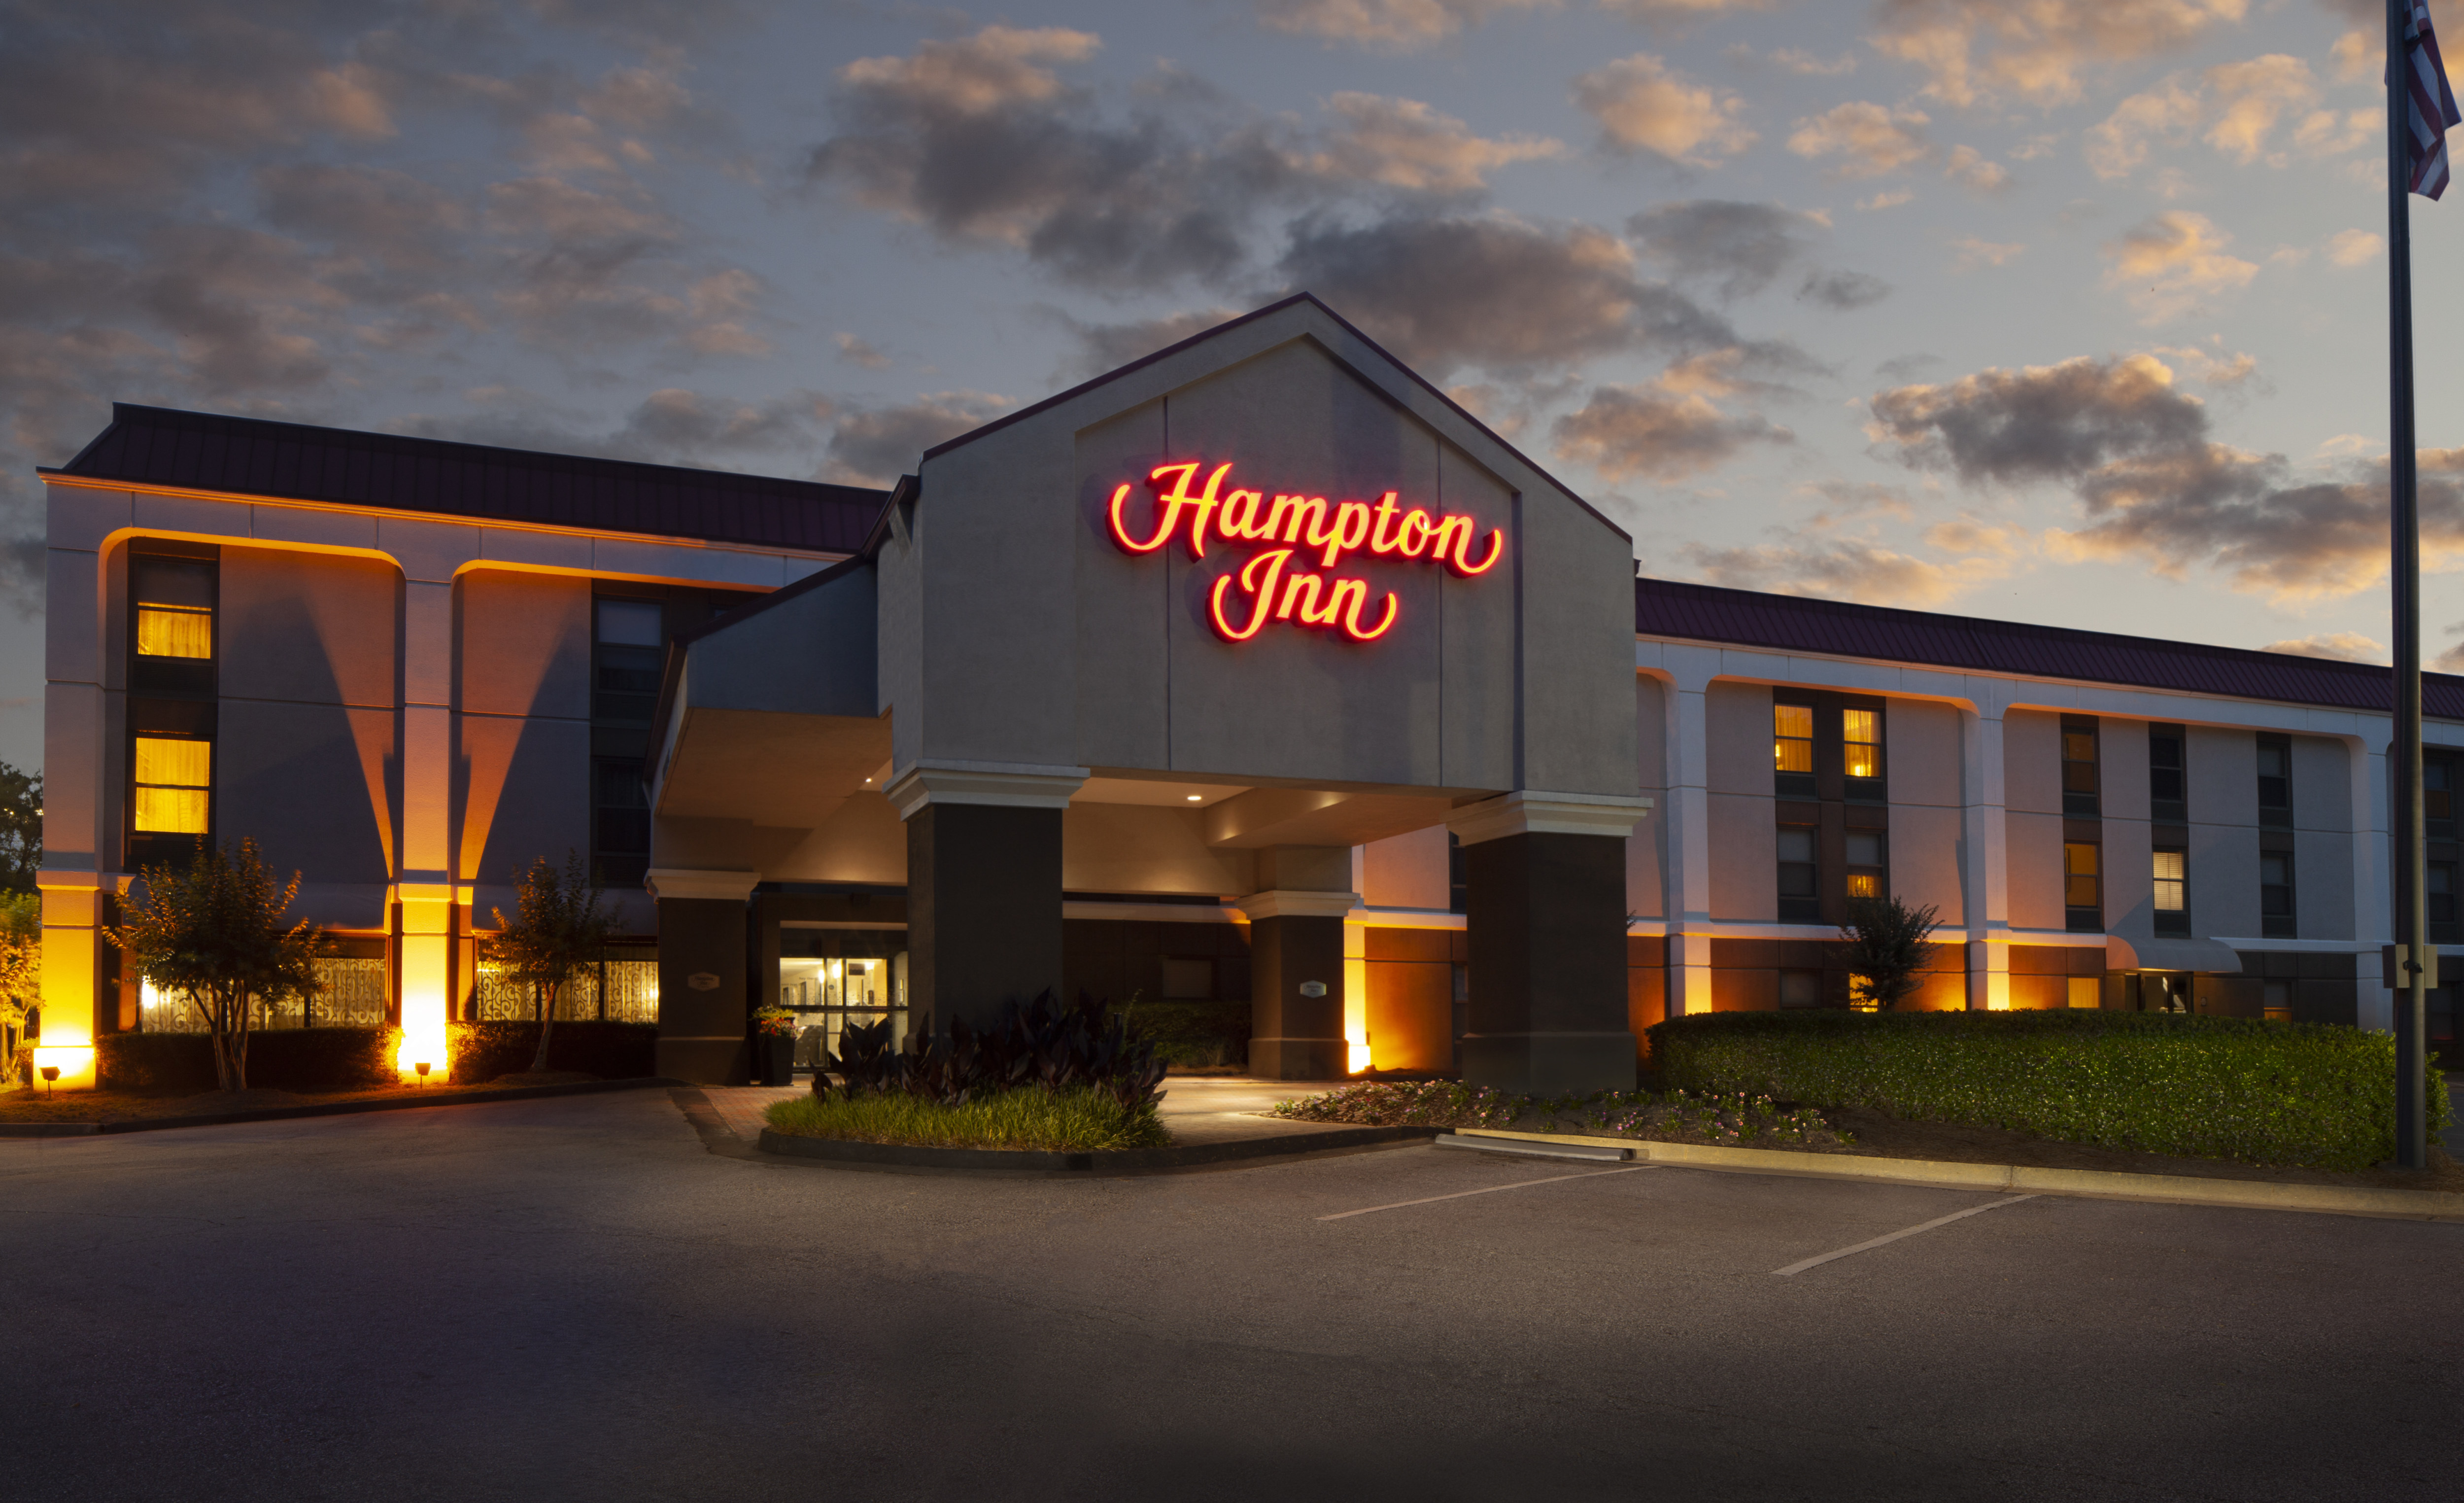 Hampton Inn Hotel Exterior at Night